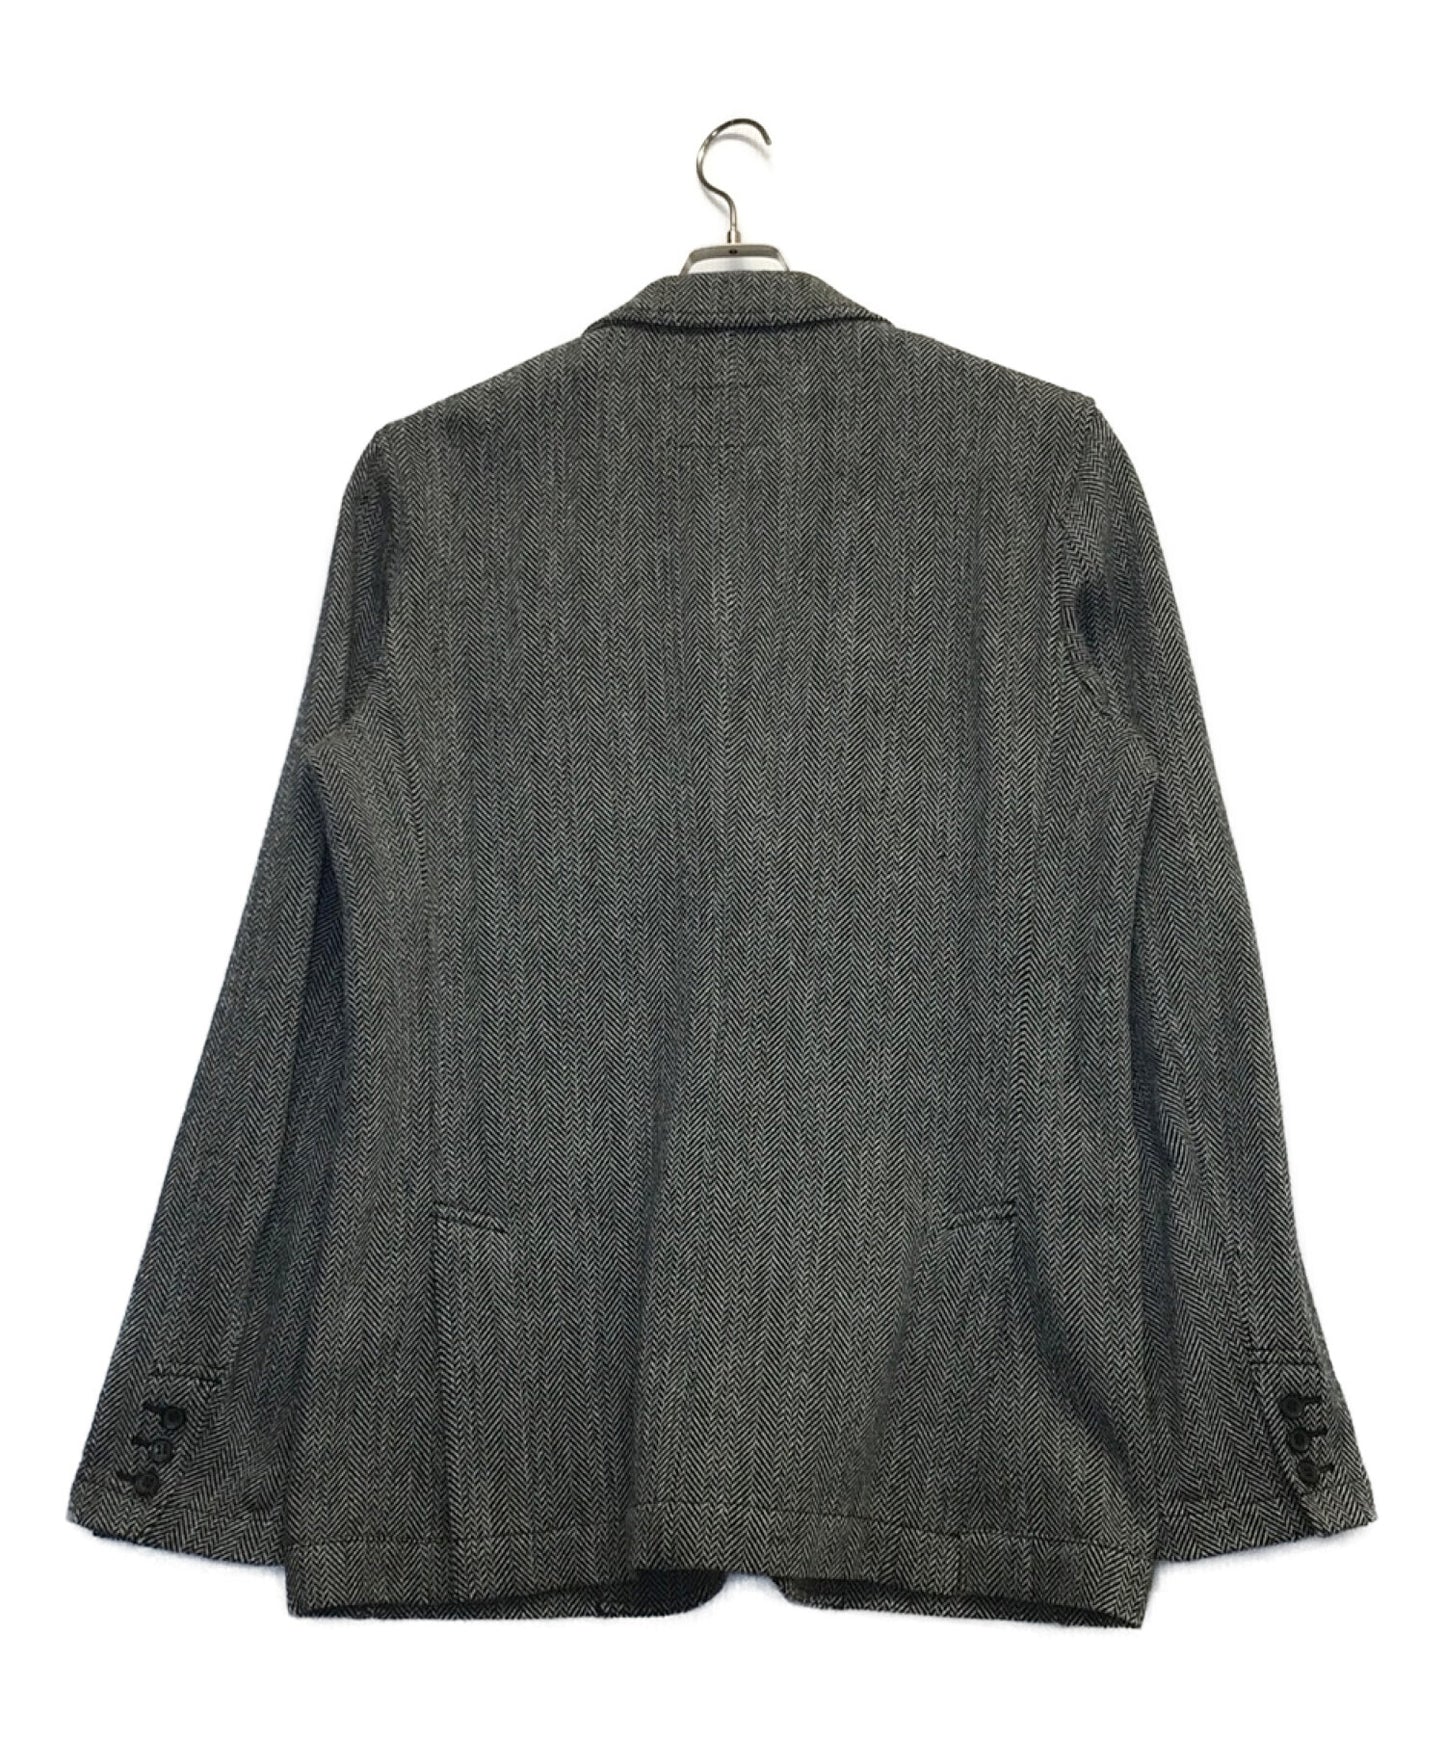 [Pre-owned] COMME des GARCONS HOMME DEUX Tailored Jackets Jackets DT-J057